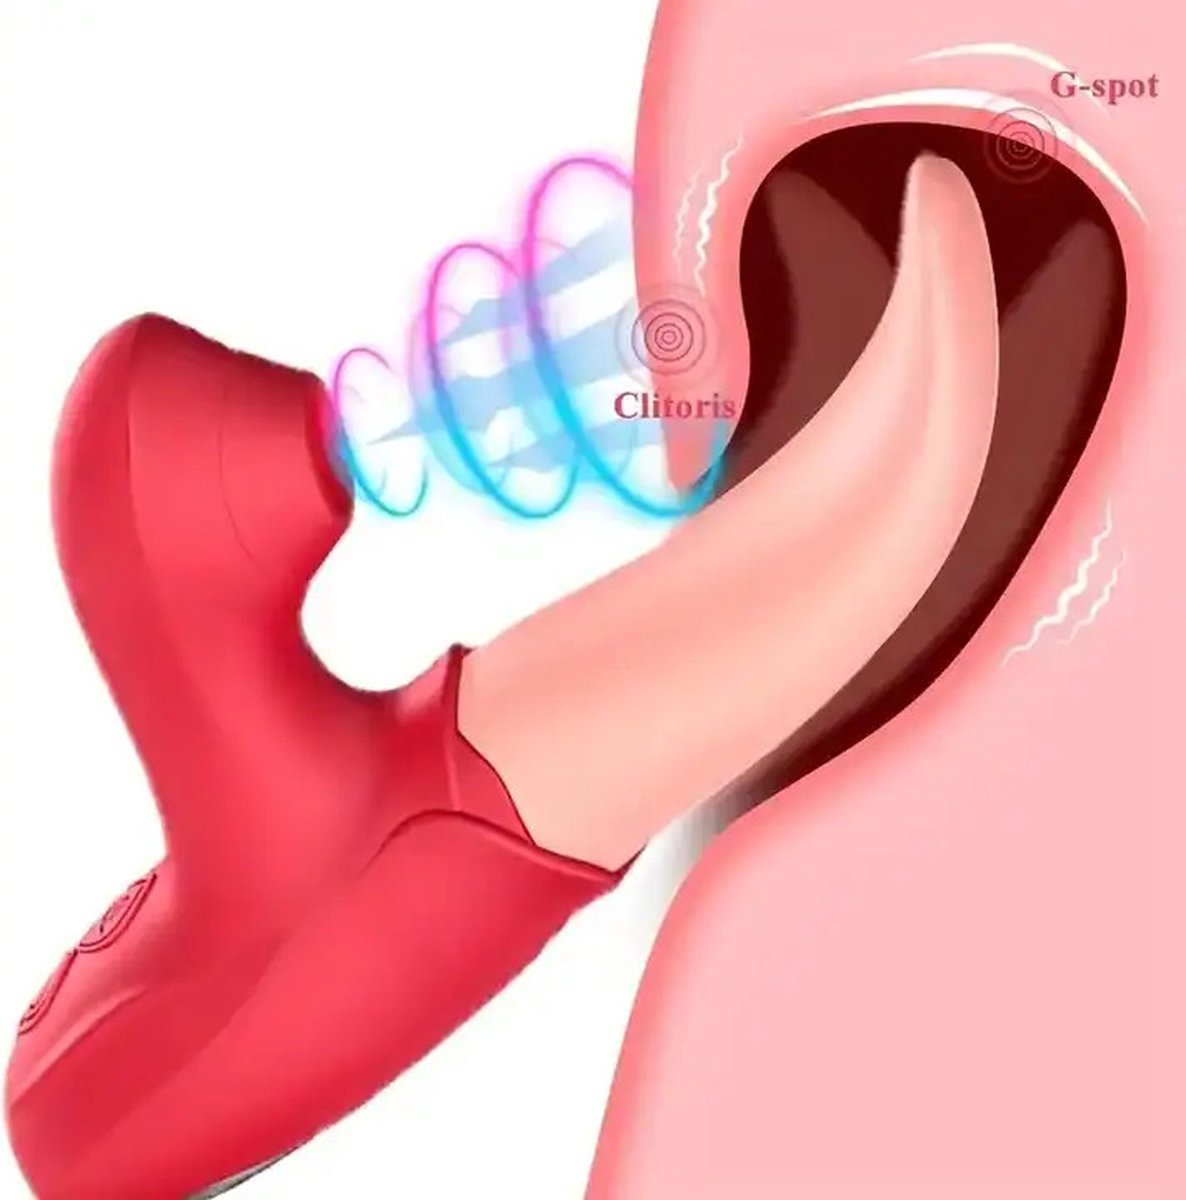 Valentijn - Tongvibrator - Vibrator - G Spot vibratie - Seks speeltje - Koppels - Vrouwen - Orgasme - Erotiek - G-spot Stimulatie - Clitoris - Bef vibrator - Seks - Krachtig - Zuigkracht - Clitoris stimulatie